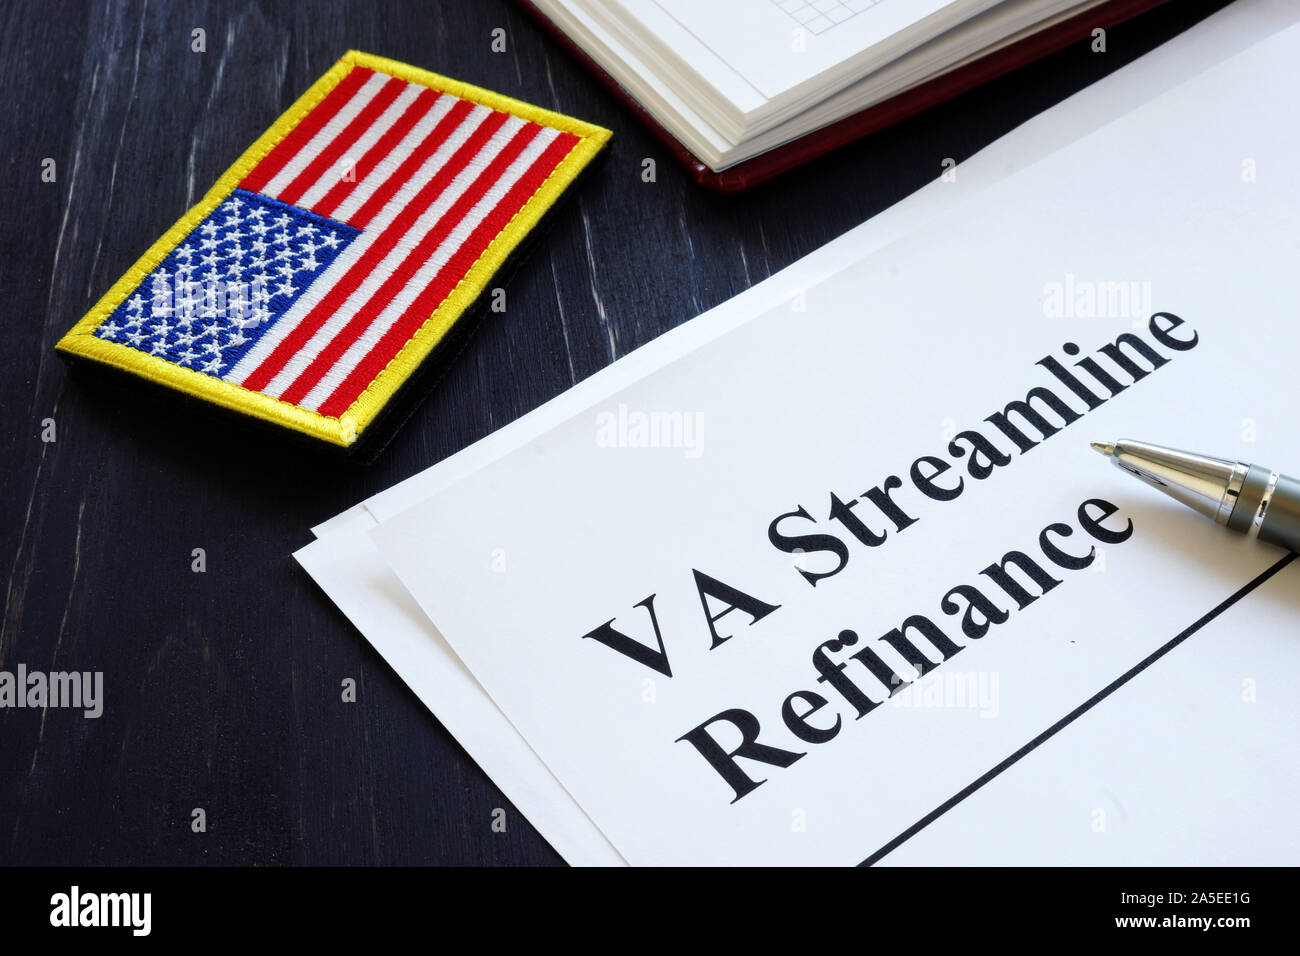 VA Streamline Refinance documents for loan. Stock Photo